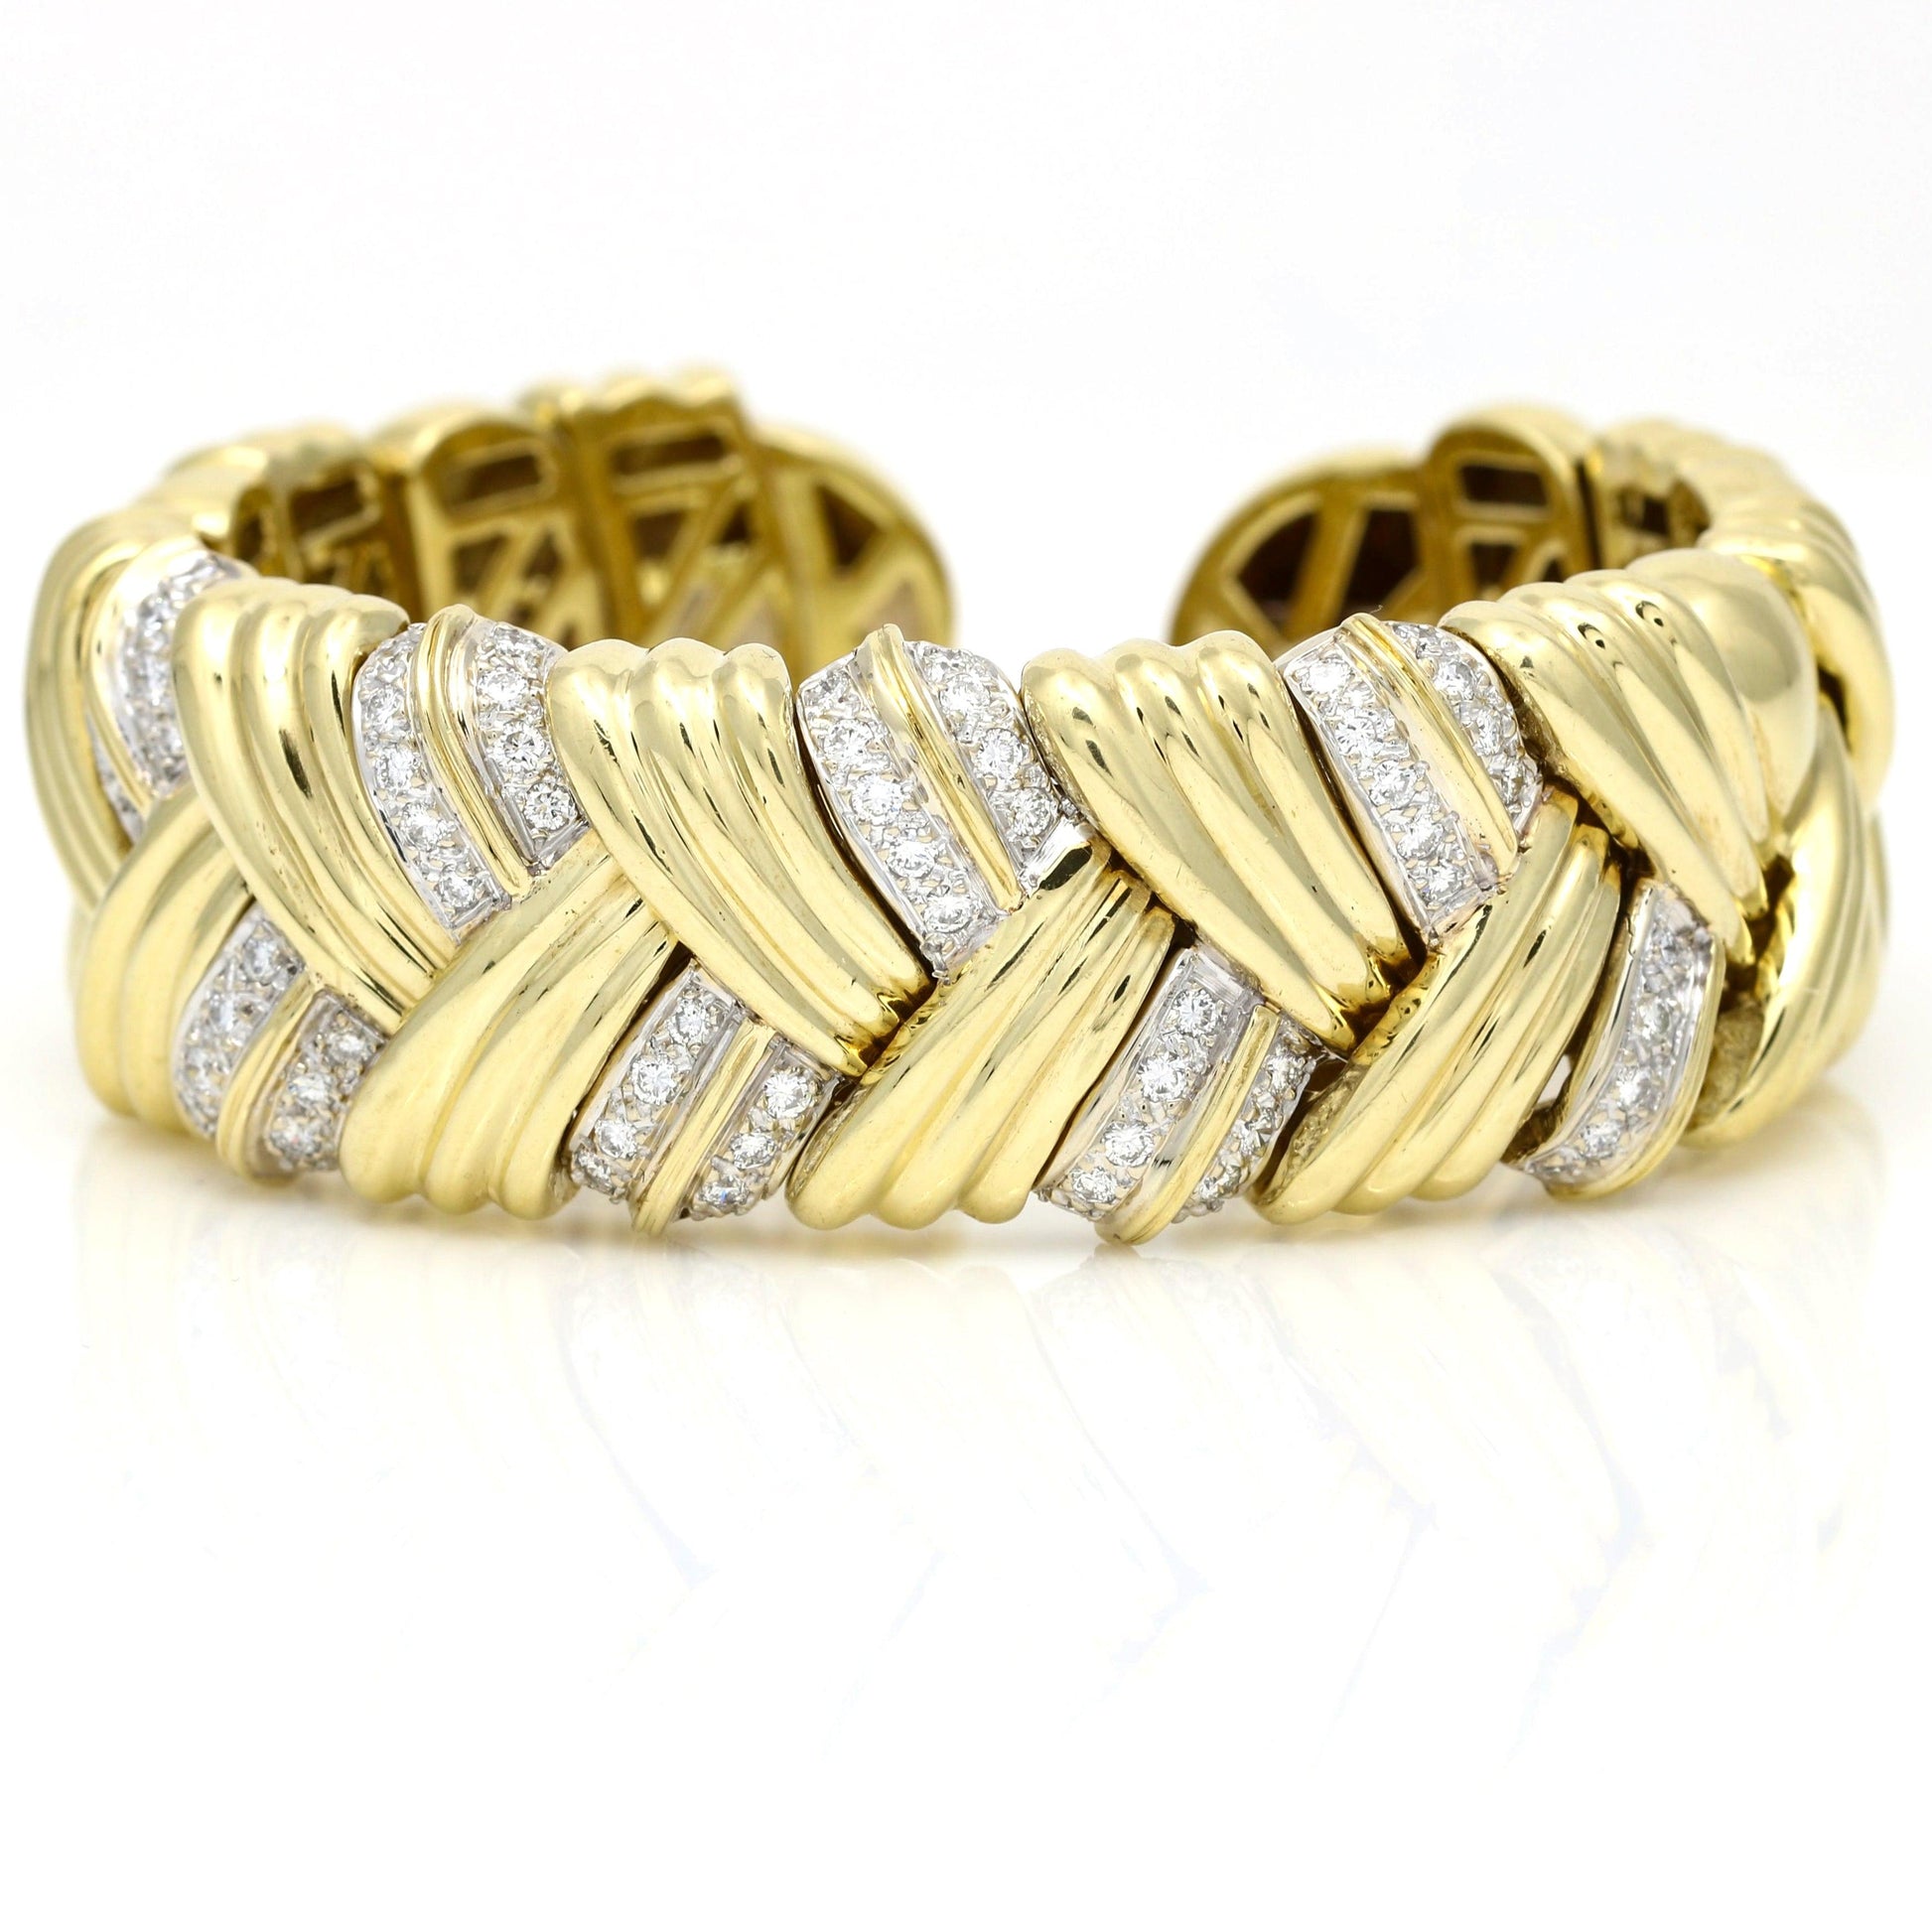 Women's Diamond Statement Cuff Bracelet in 18k Yellow Gold - 31 Jewels Inc.